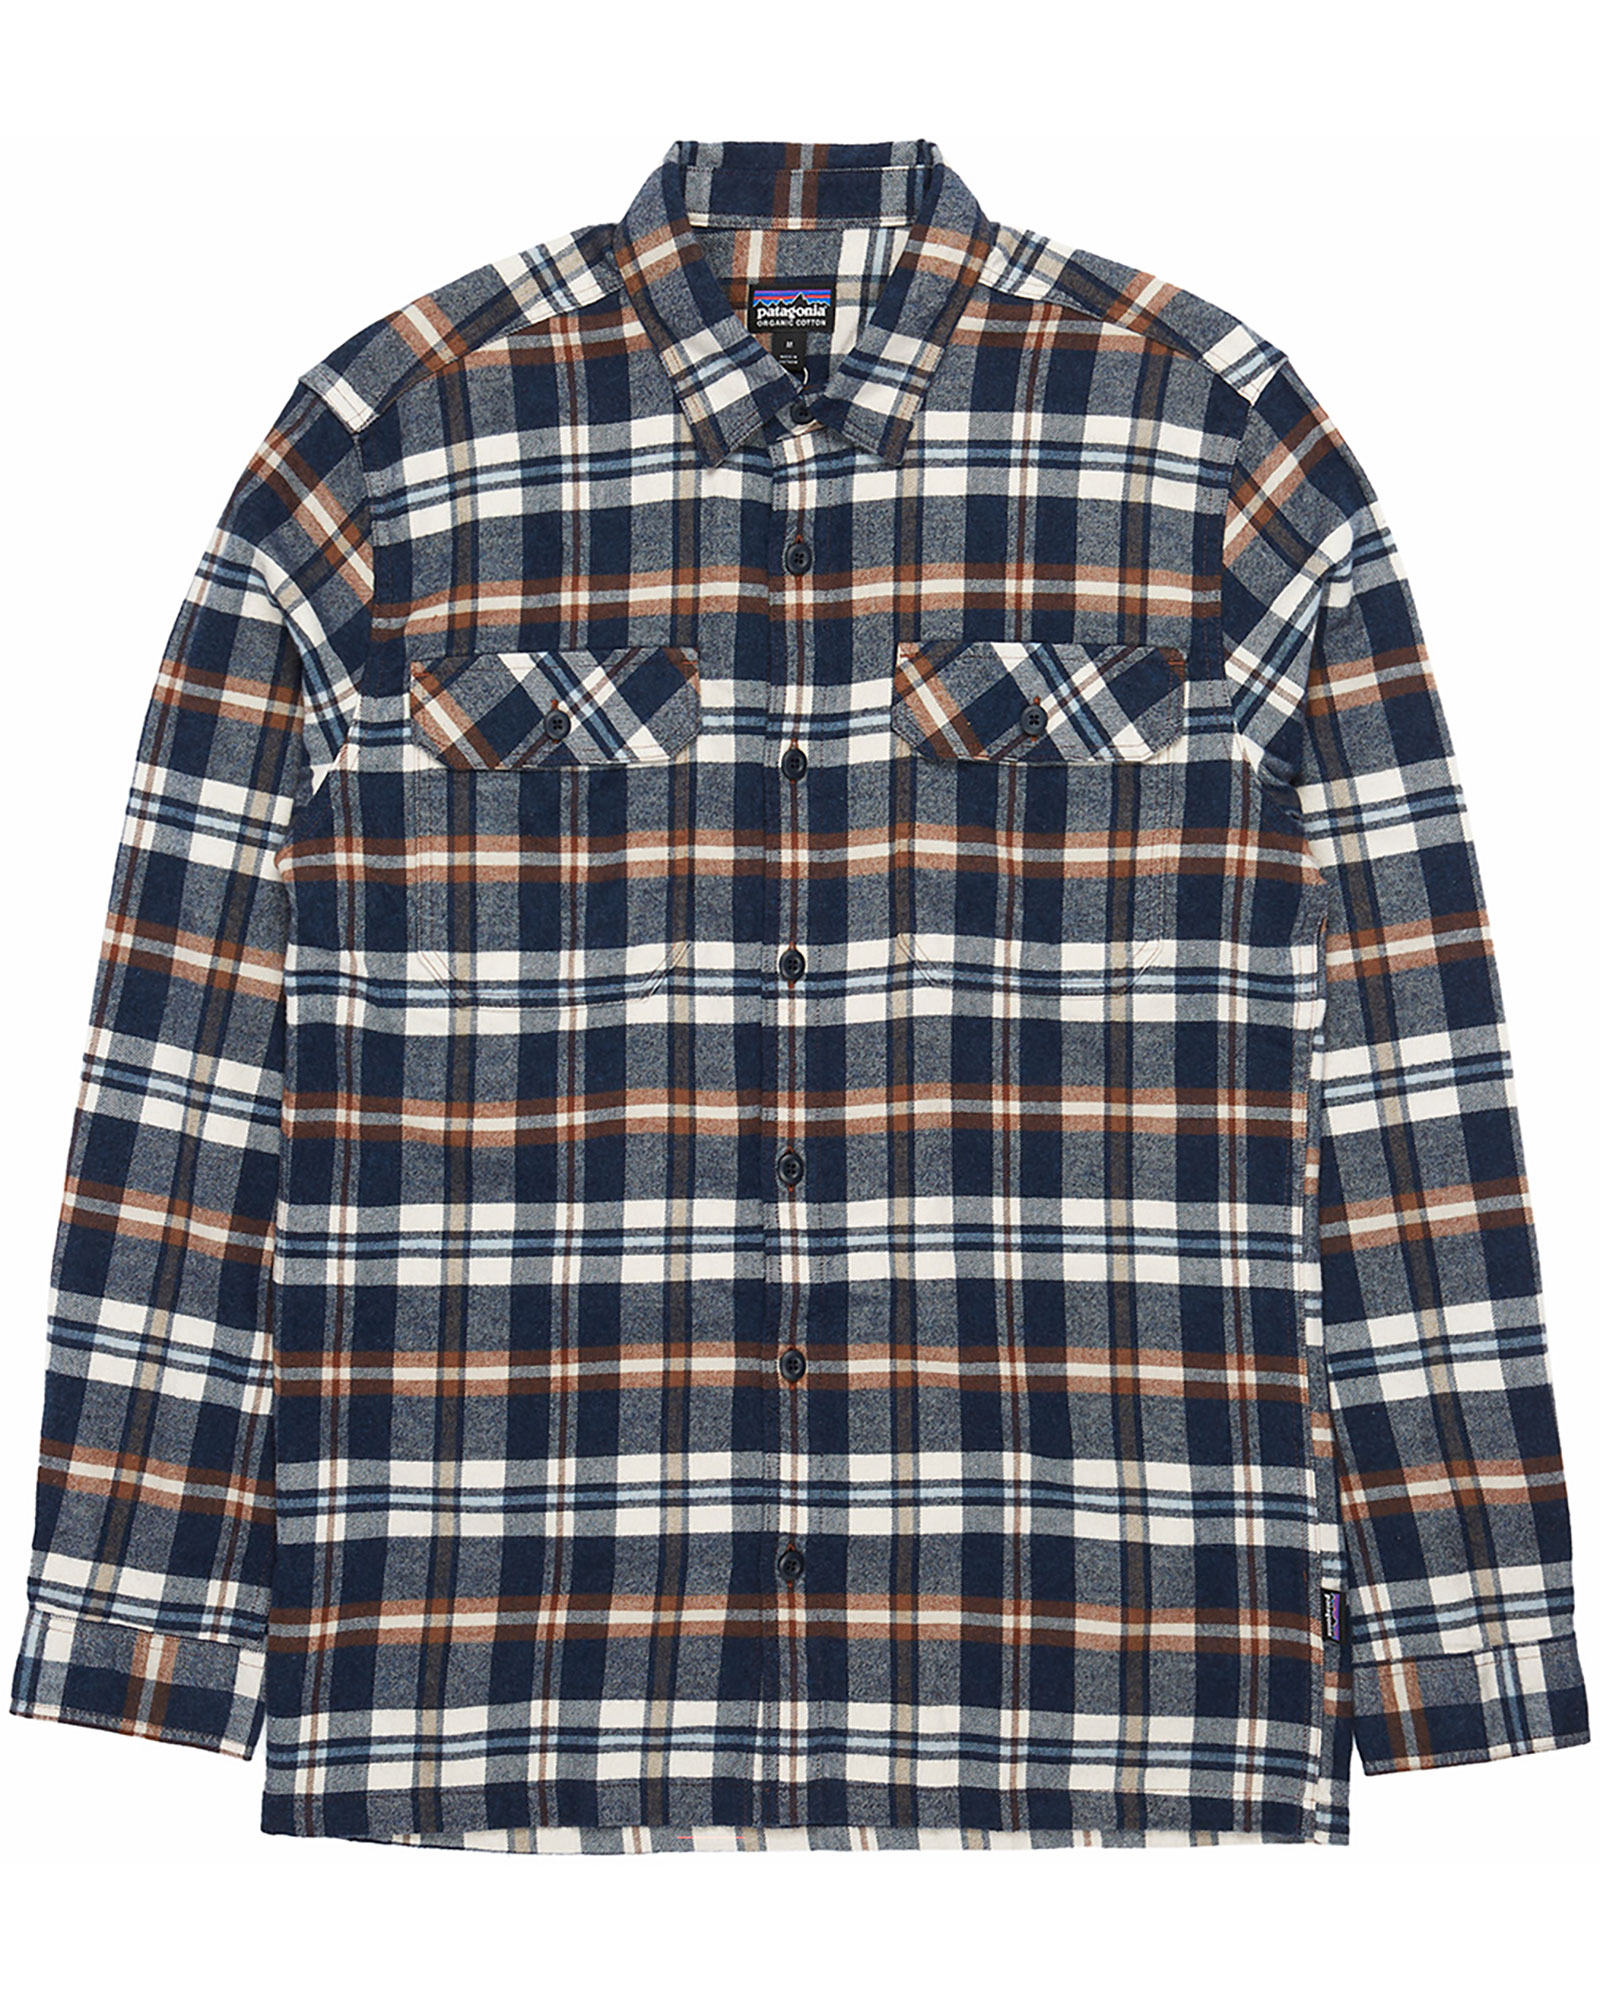 Patagonia Men’s Organic Long Sleeve Flannel Shirt - Brisk/Dolomite Blue S